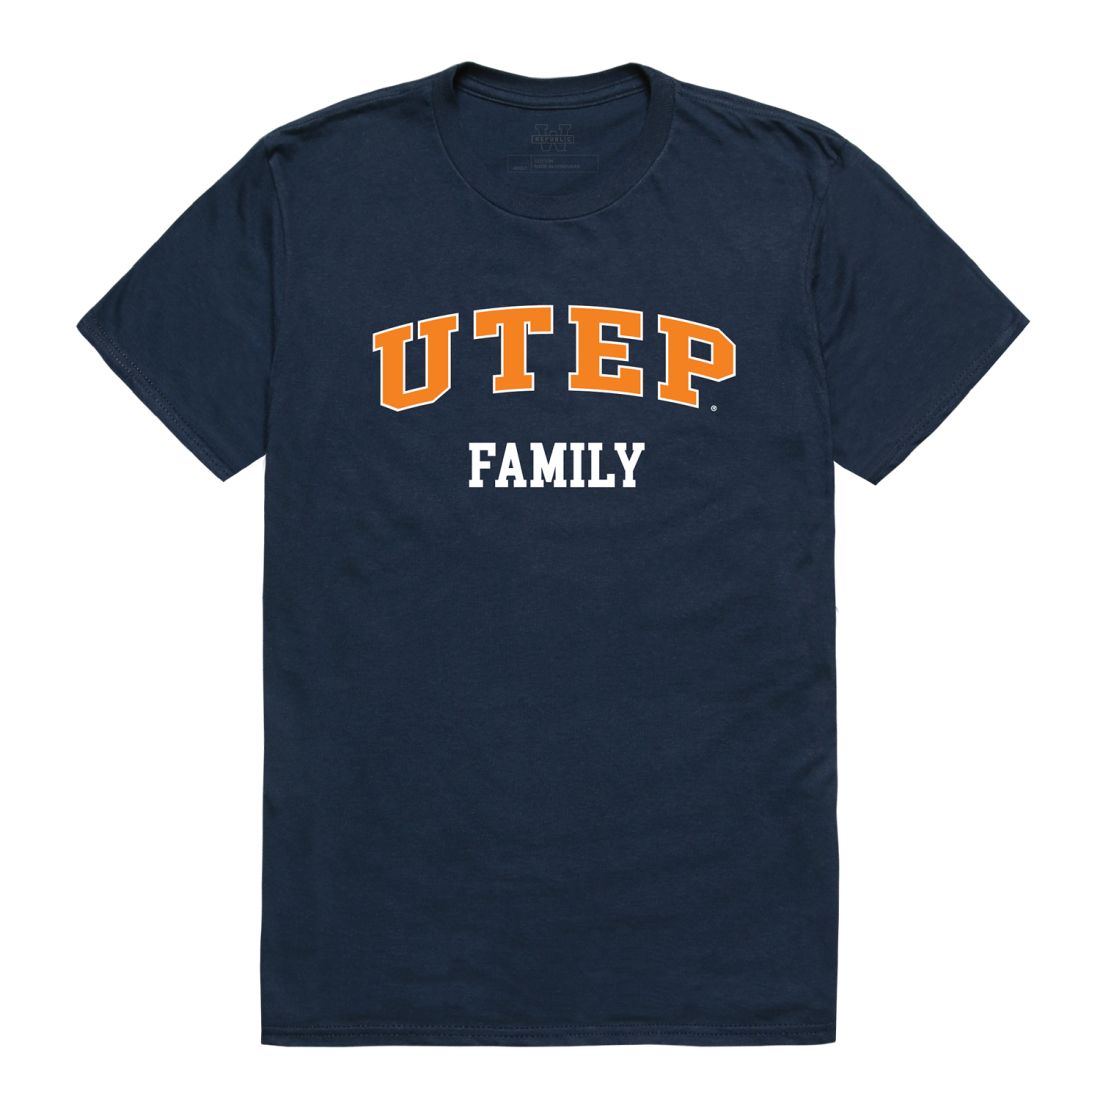 UTEP University of Texas at El Paso Miners Family T-Shirt